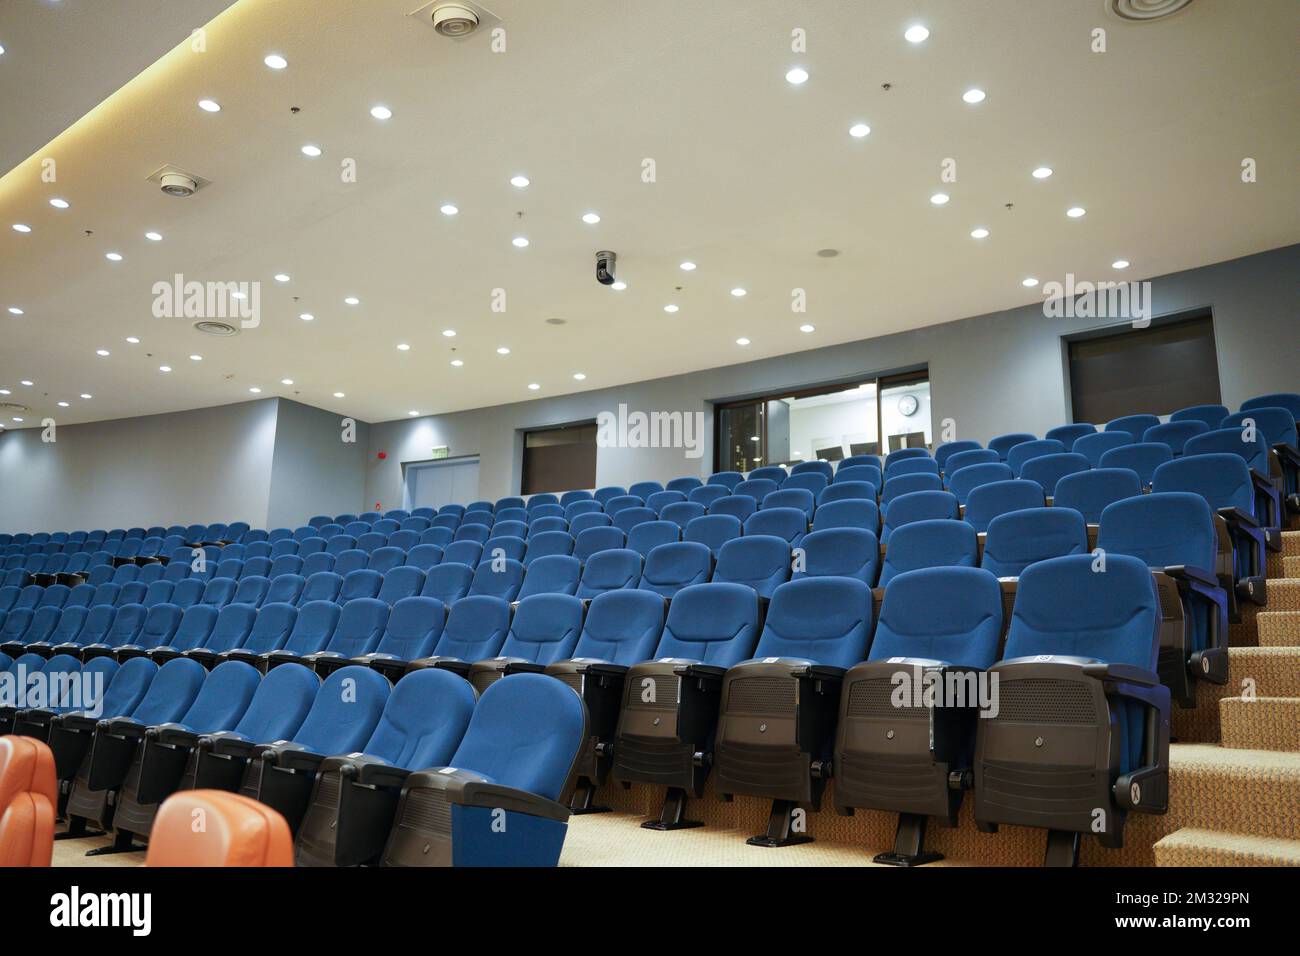 Riesige und luxuriöse Universitäts-Auditorium-Stühle. Blaue Theaterstühle. Stockfoto